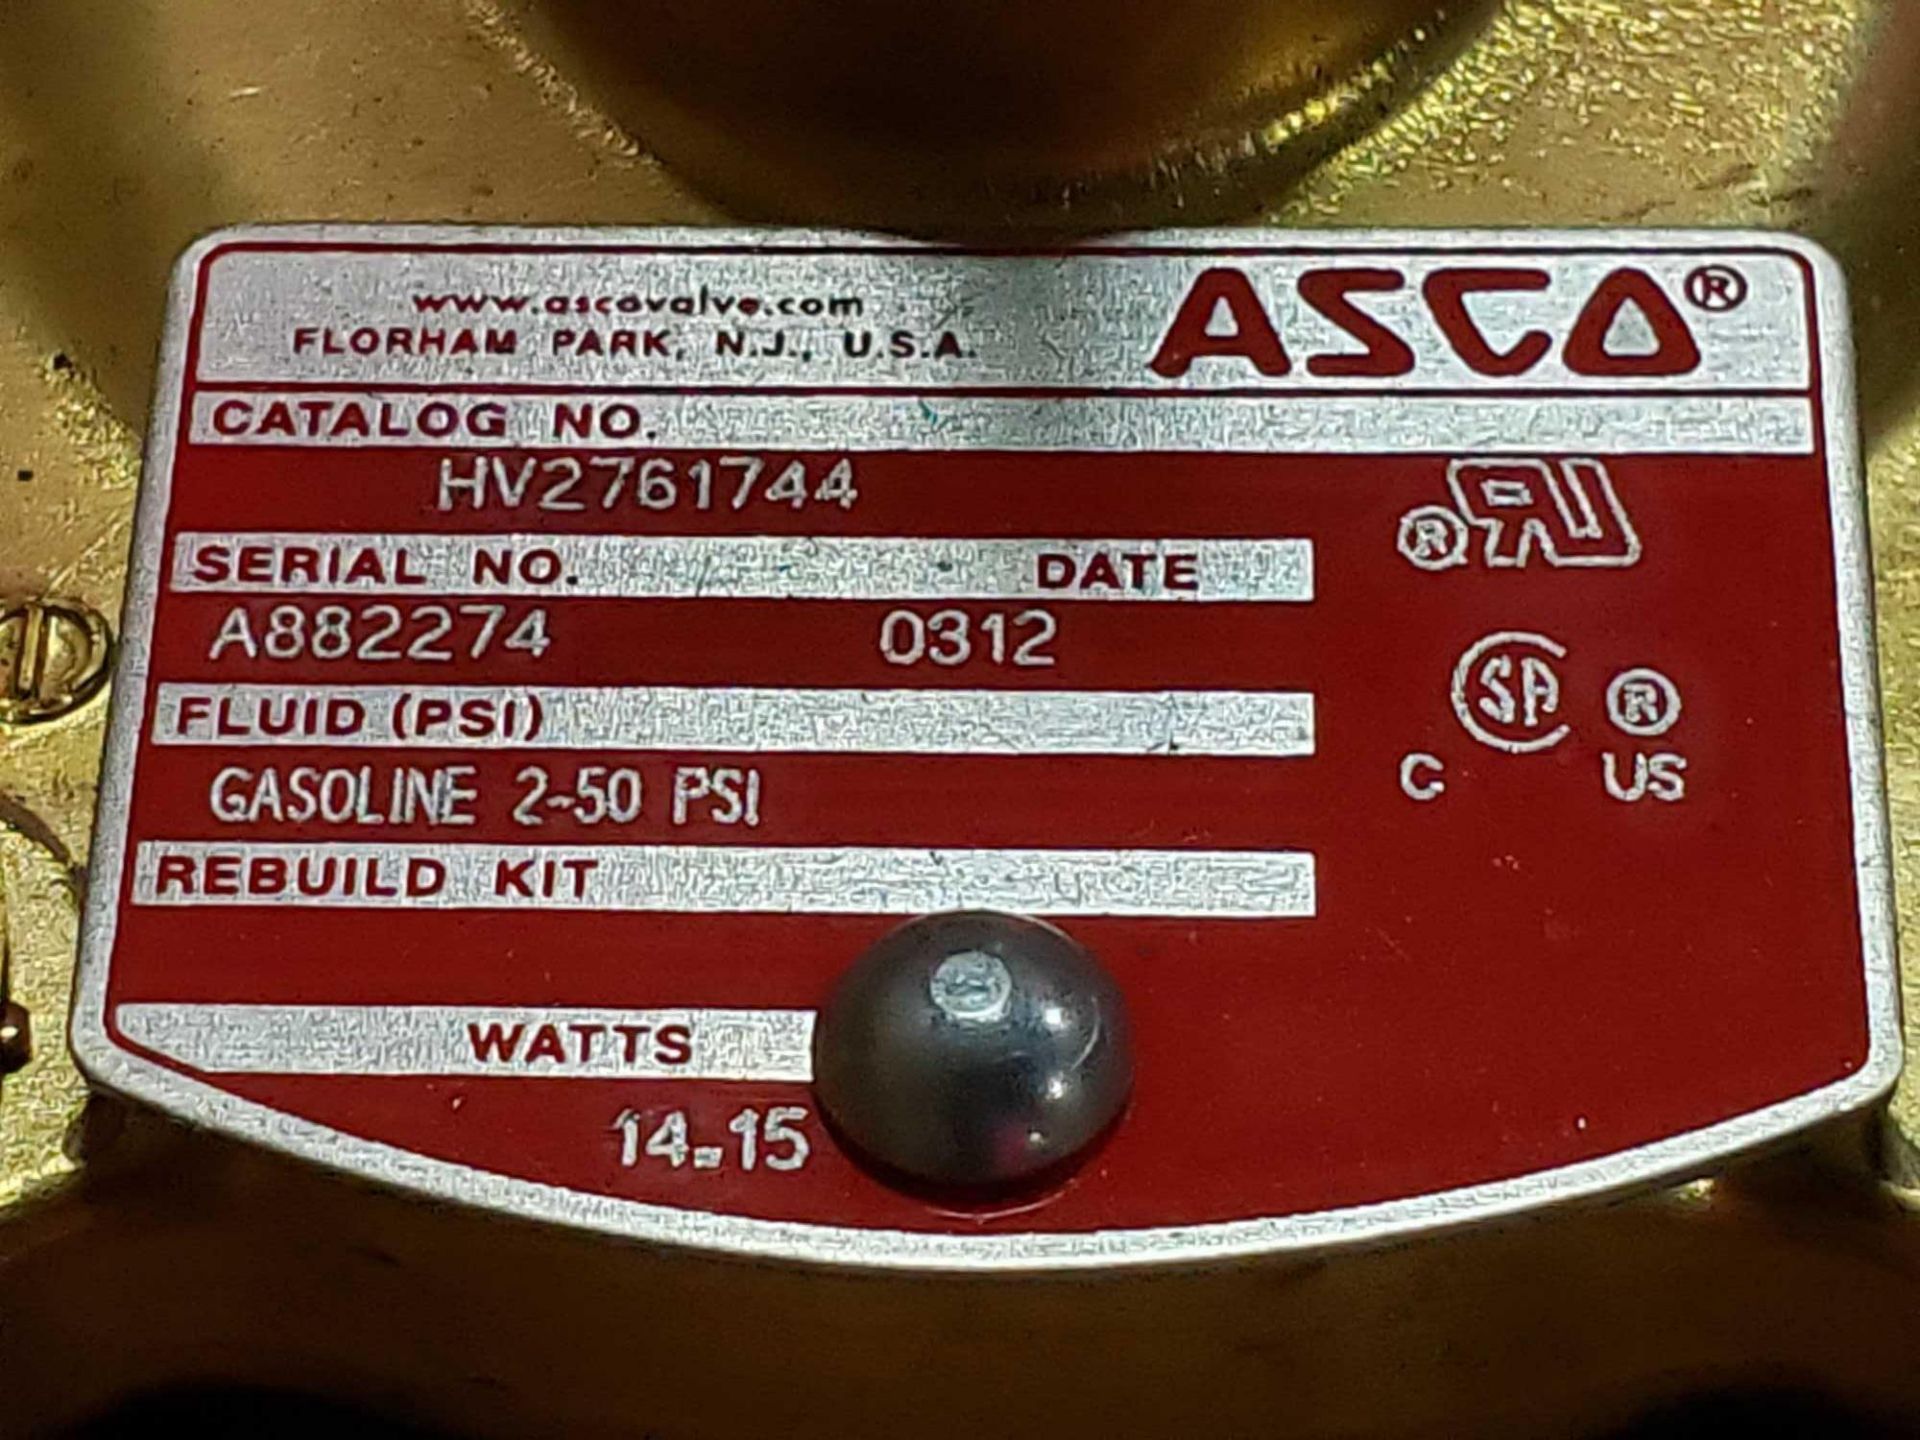 Asco valve catalog HV2761744. New as pictured. - Image 2 of 2